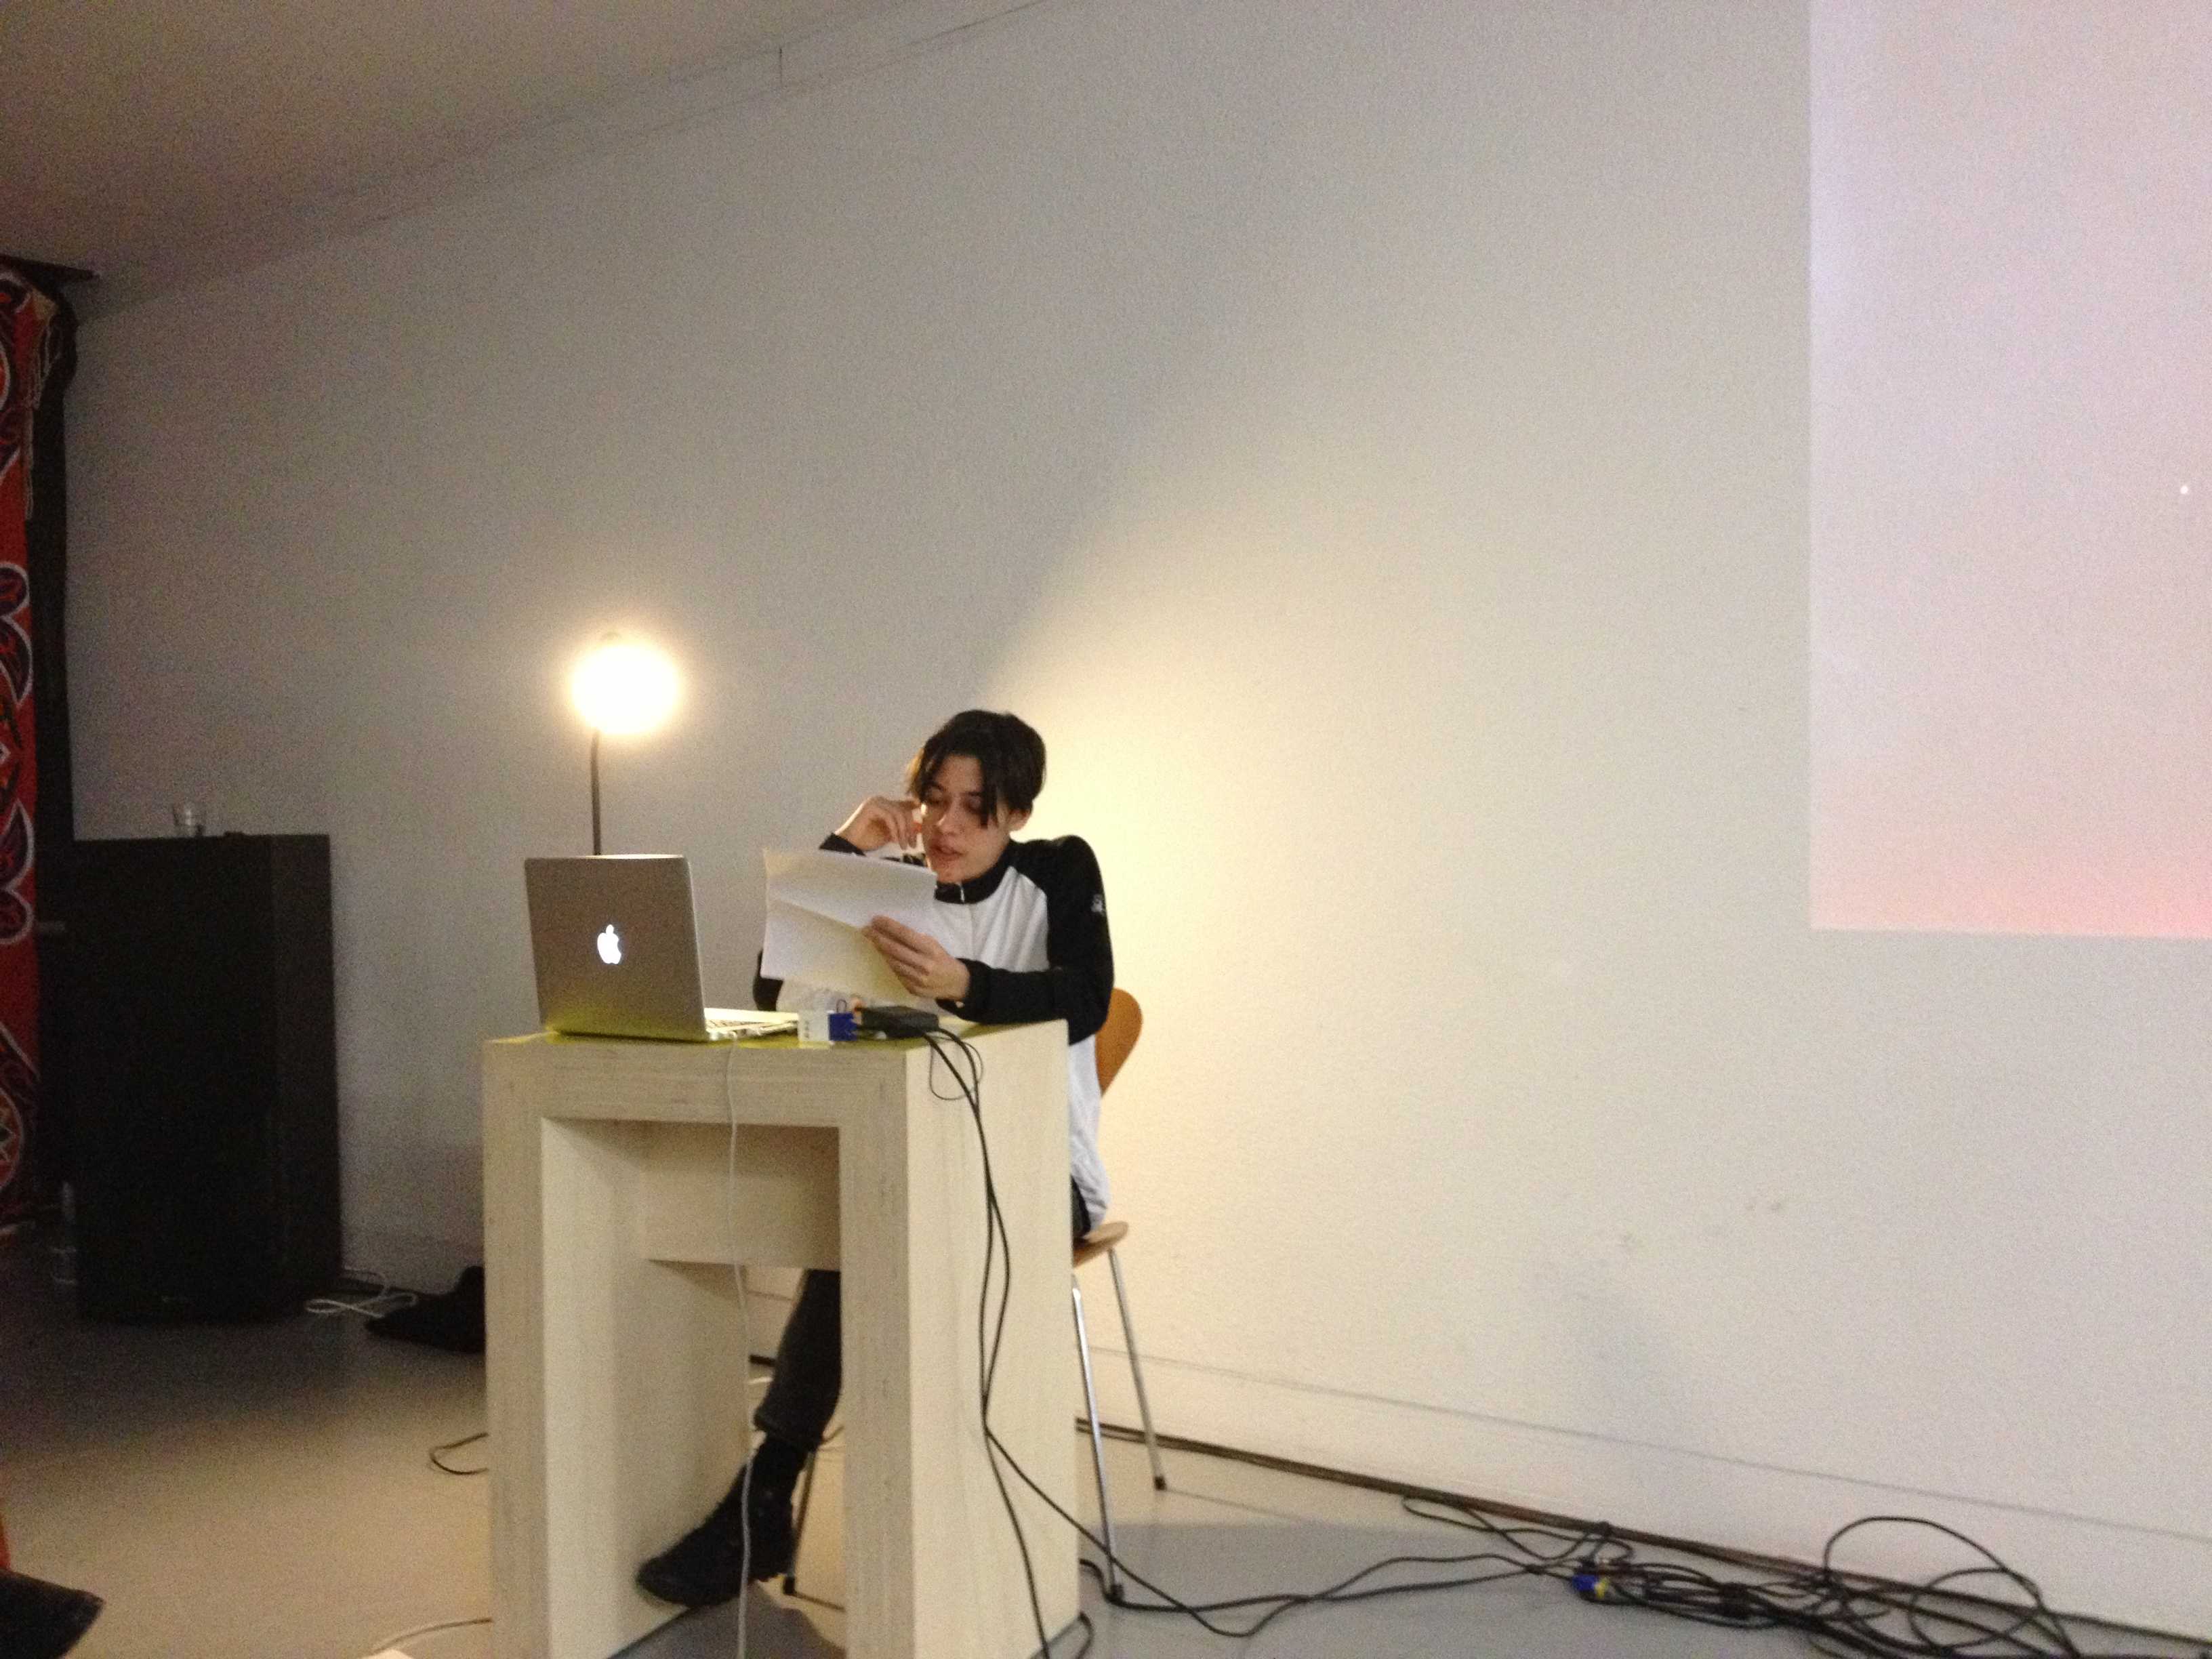 DAI, December 2014- Katia Barrett's lecture presentation